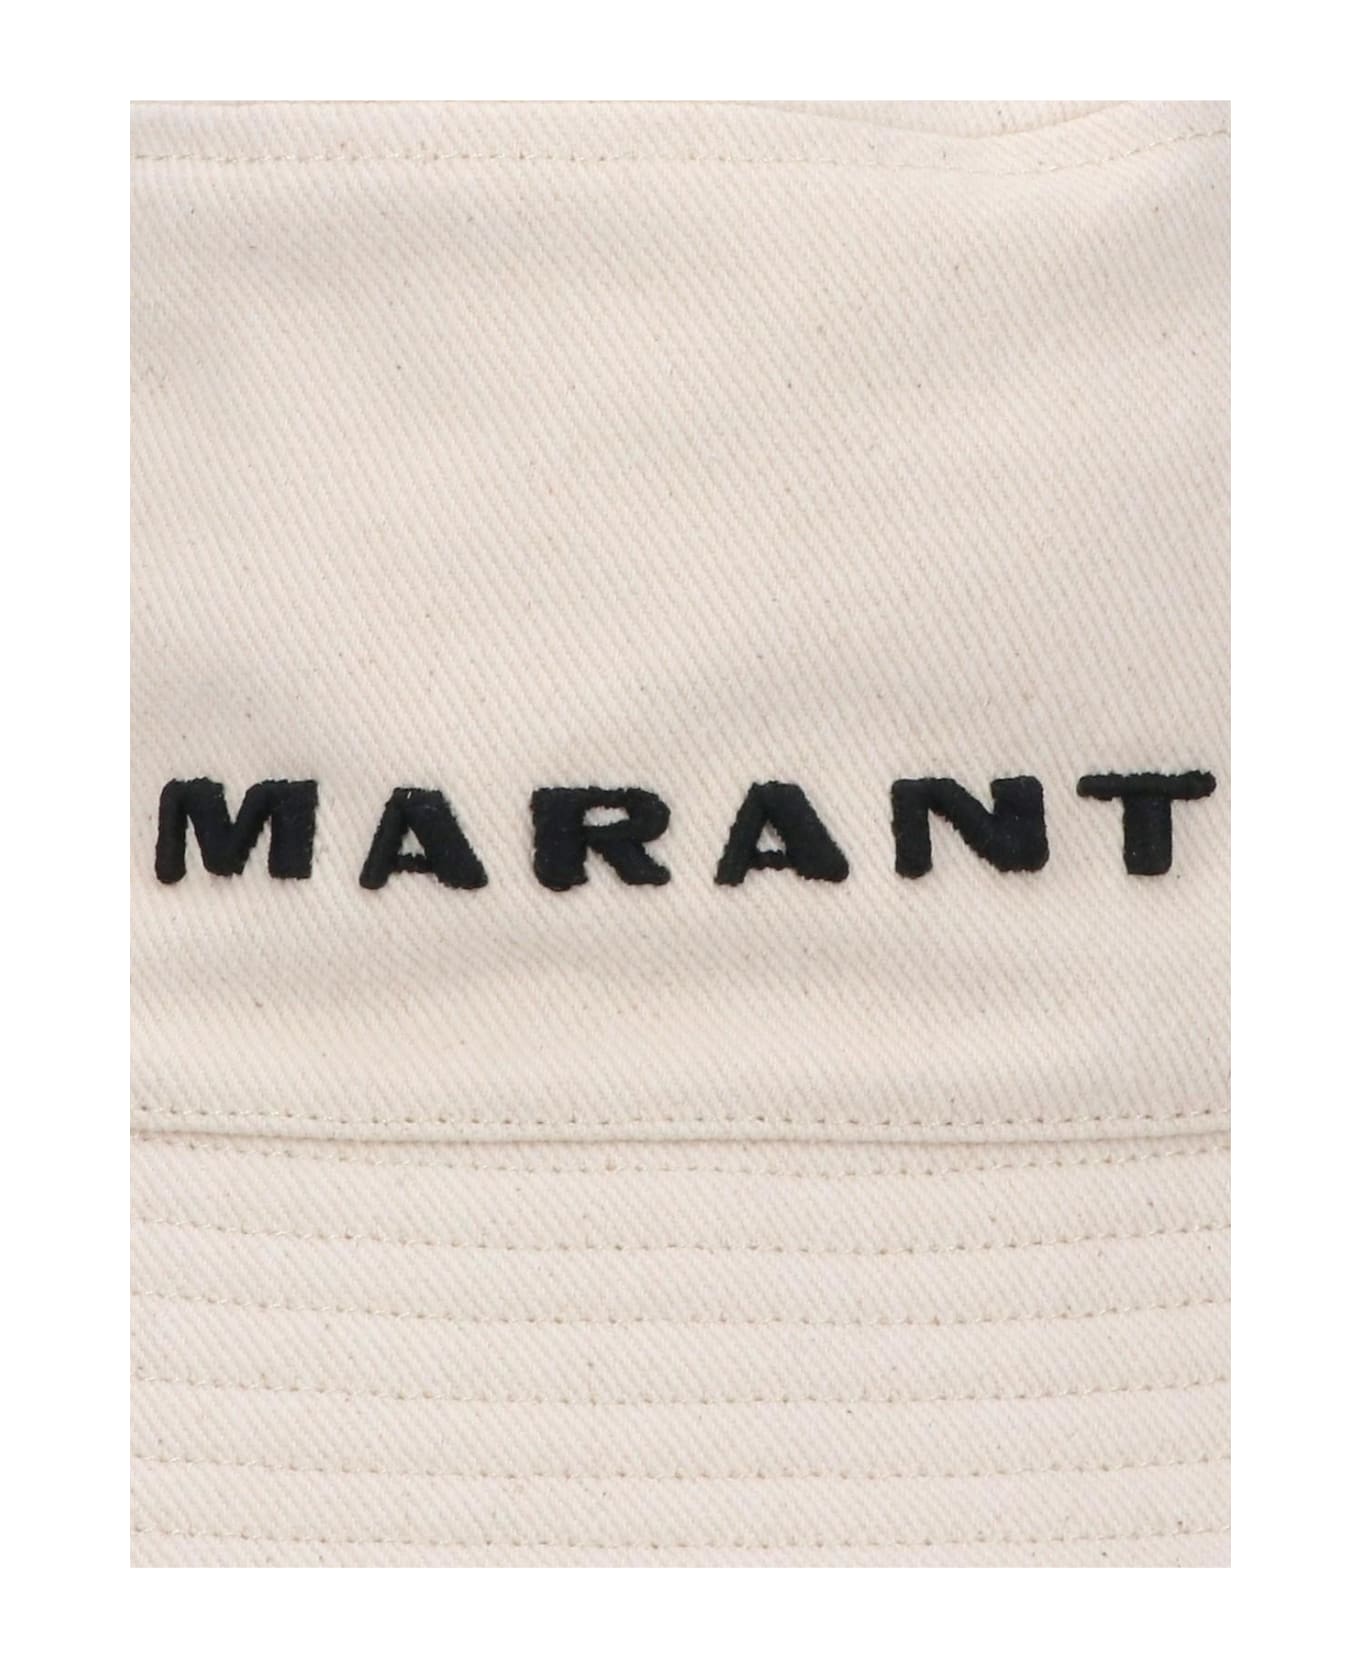 Isabel Marant Haley Hat - Cream